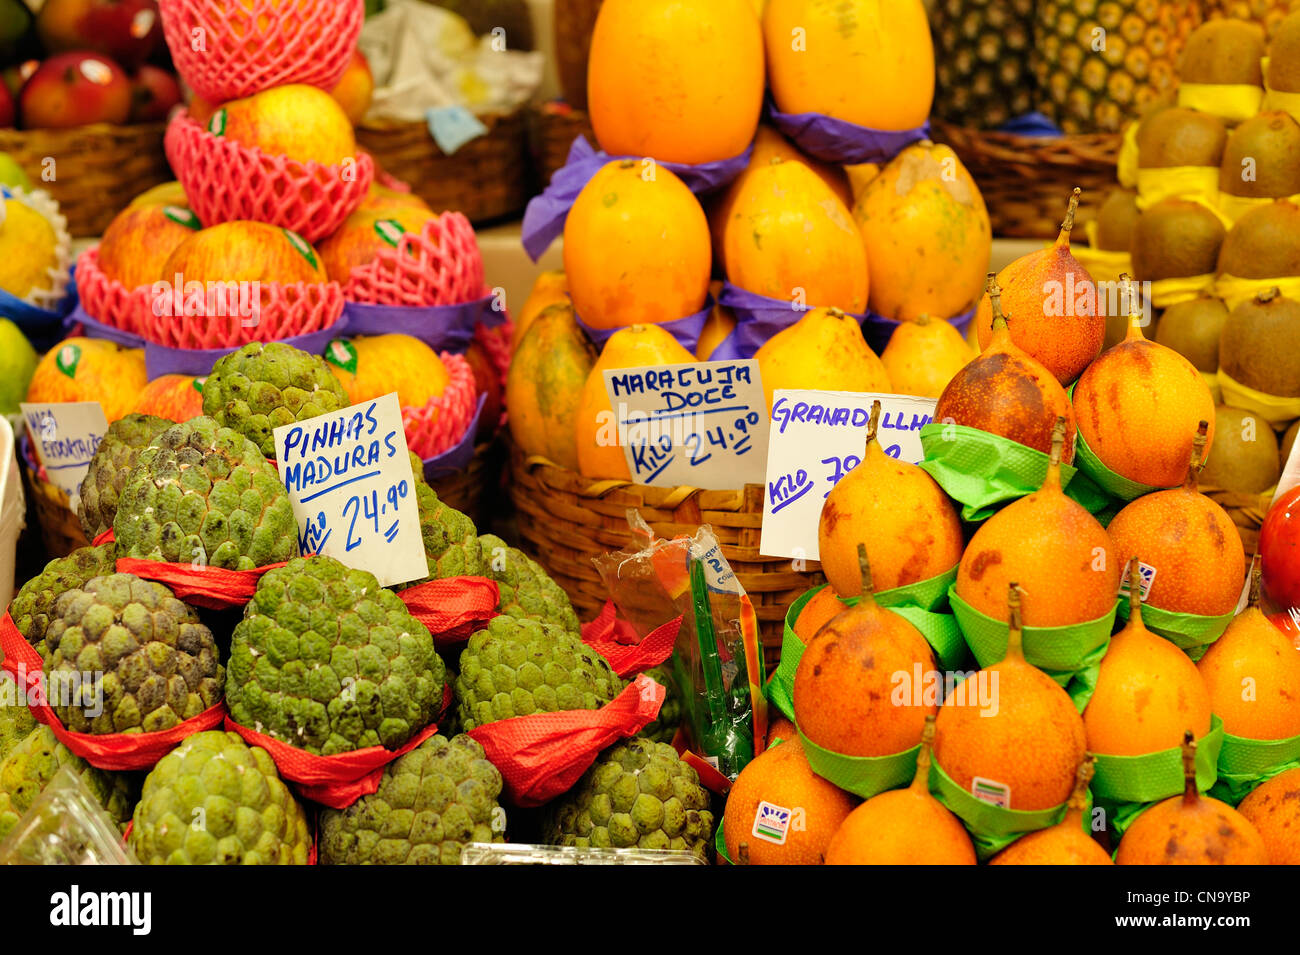 Brazil, Sao Paulo, Mercadao city market, fruit stalls Stock Photo